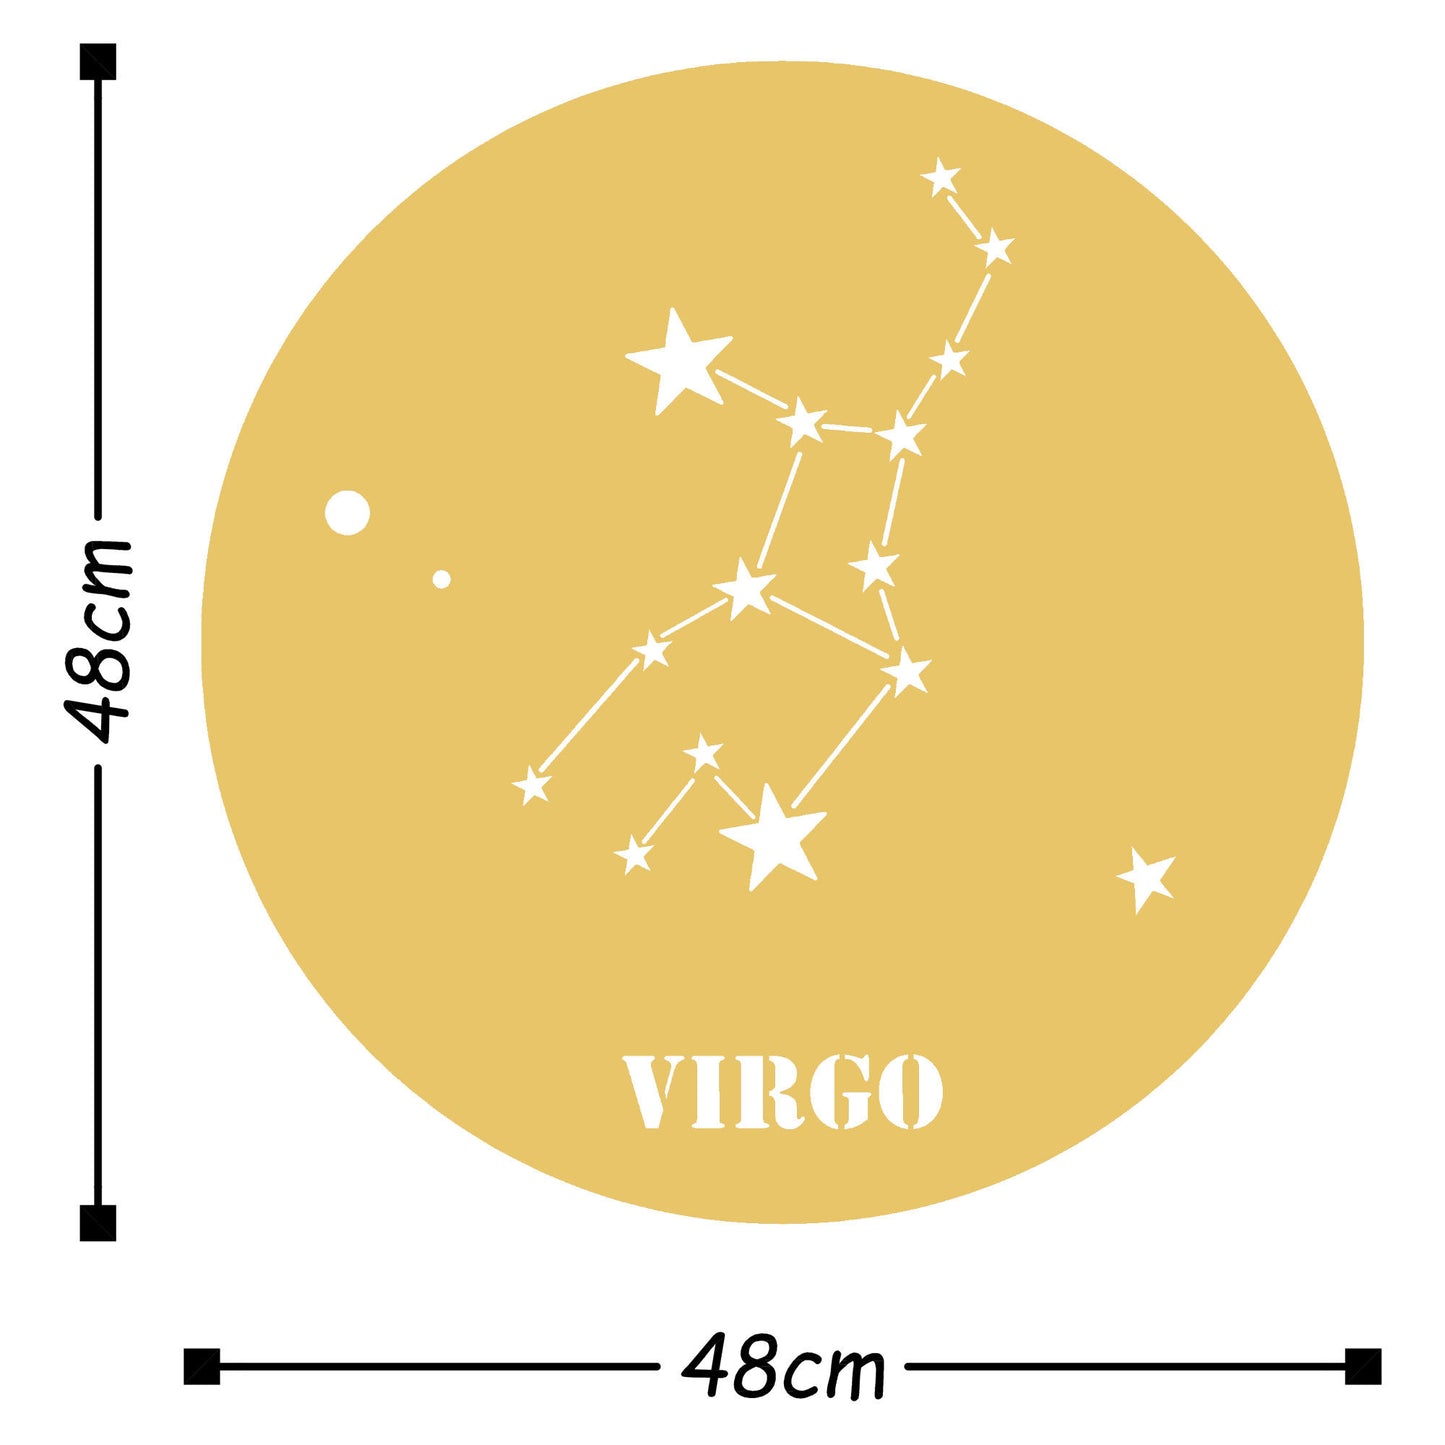 Vırgo Horoscope - Gold - Decorative Metal Wall Accessory